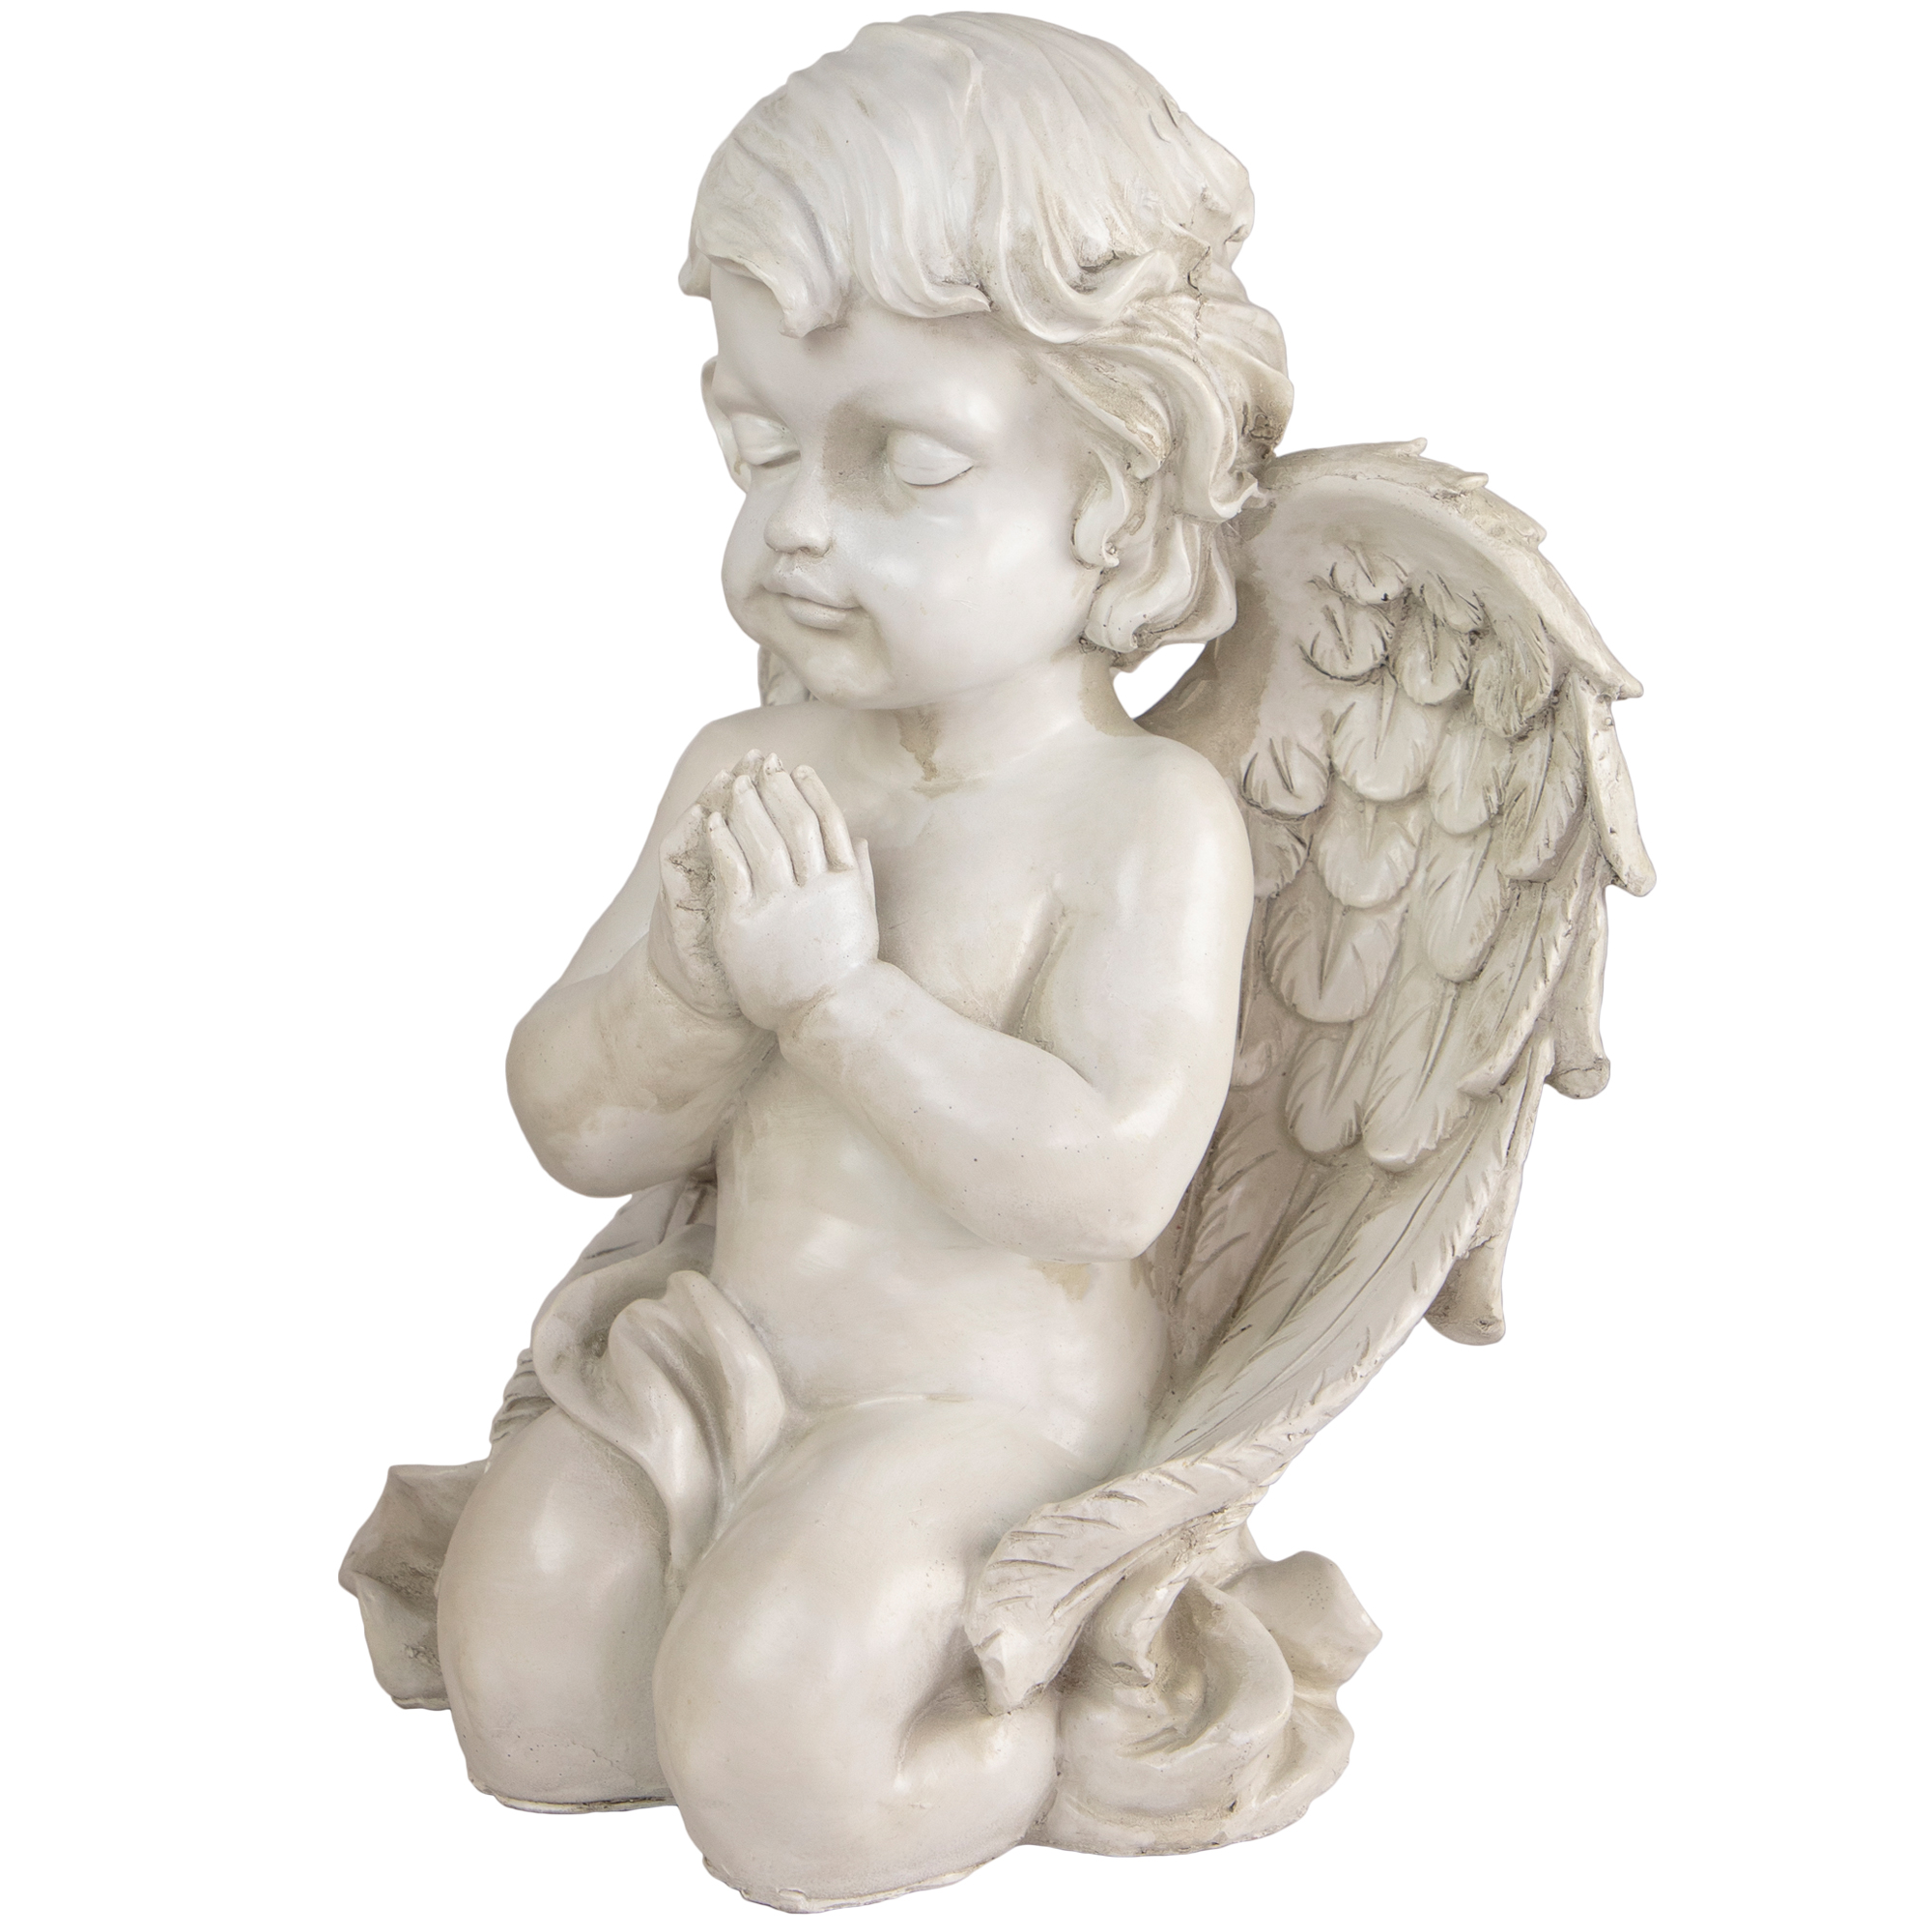 Northlight 13.5" Kneeling Praying Cherub Angel Religious Outdoor Patio Garden Statue - Gray - image 4 of 5